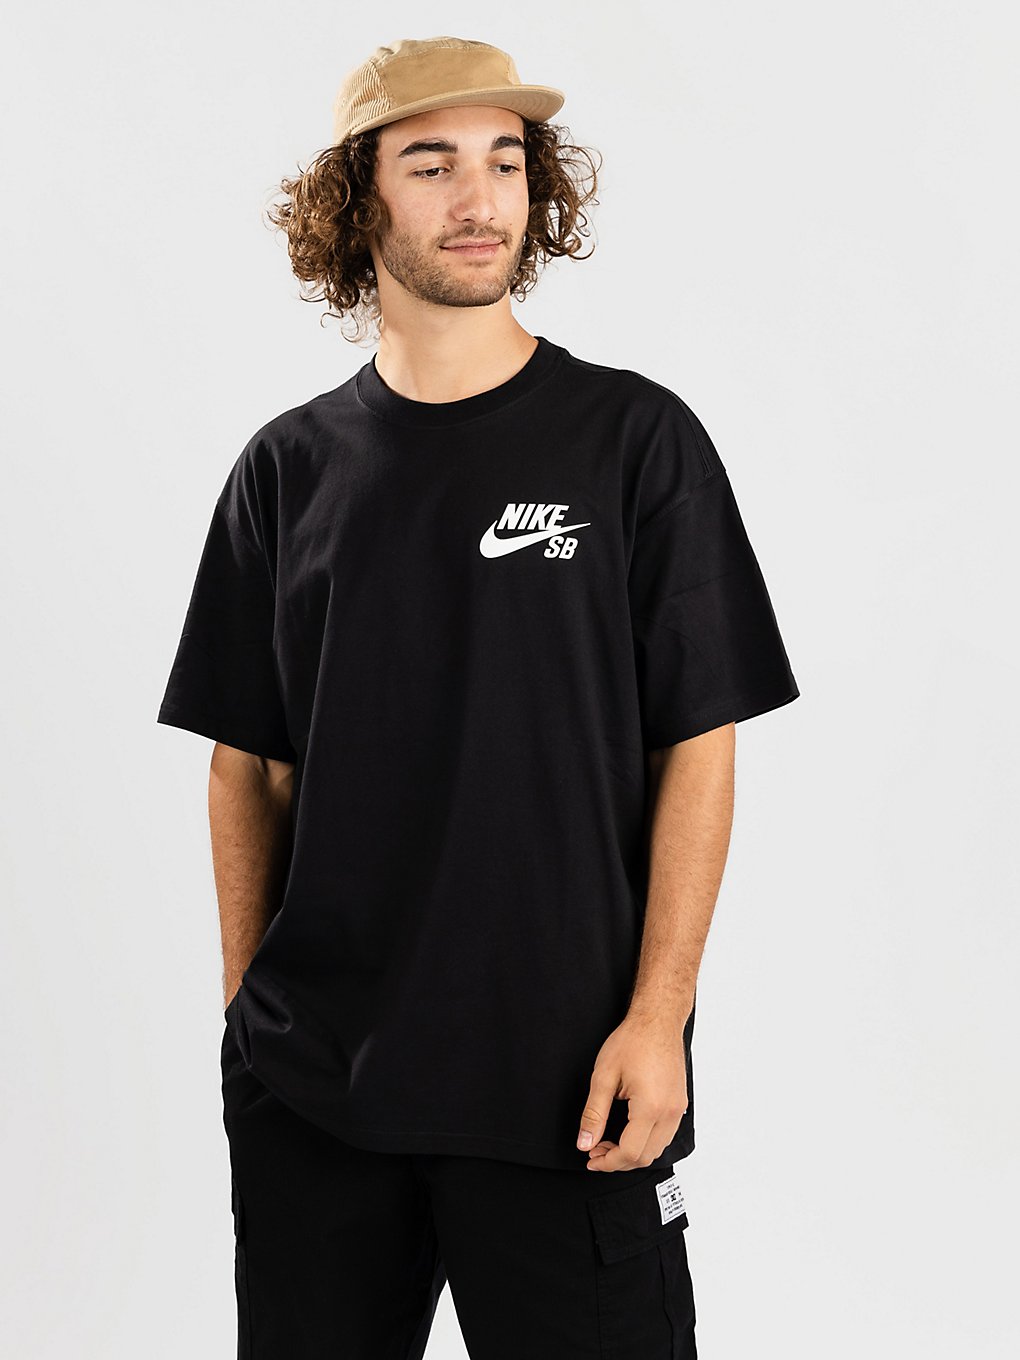 Nike Sb T-Shirt white kaufen